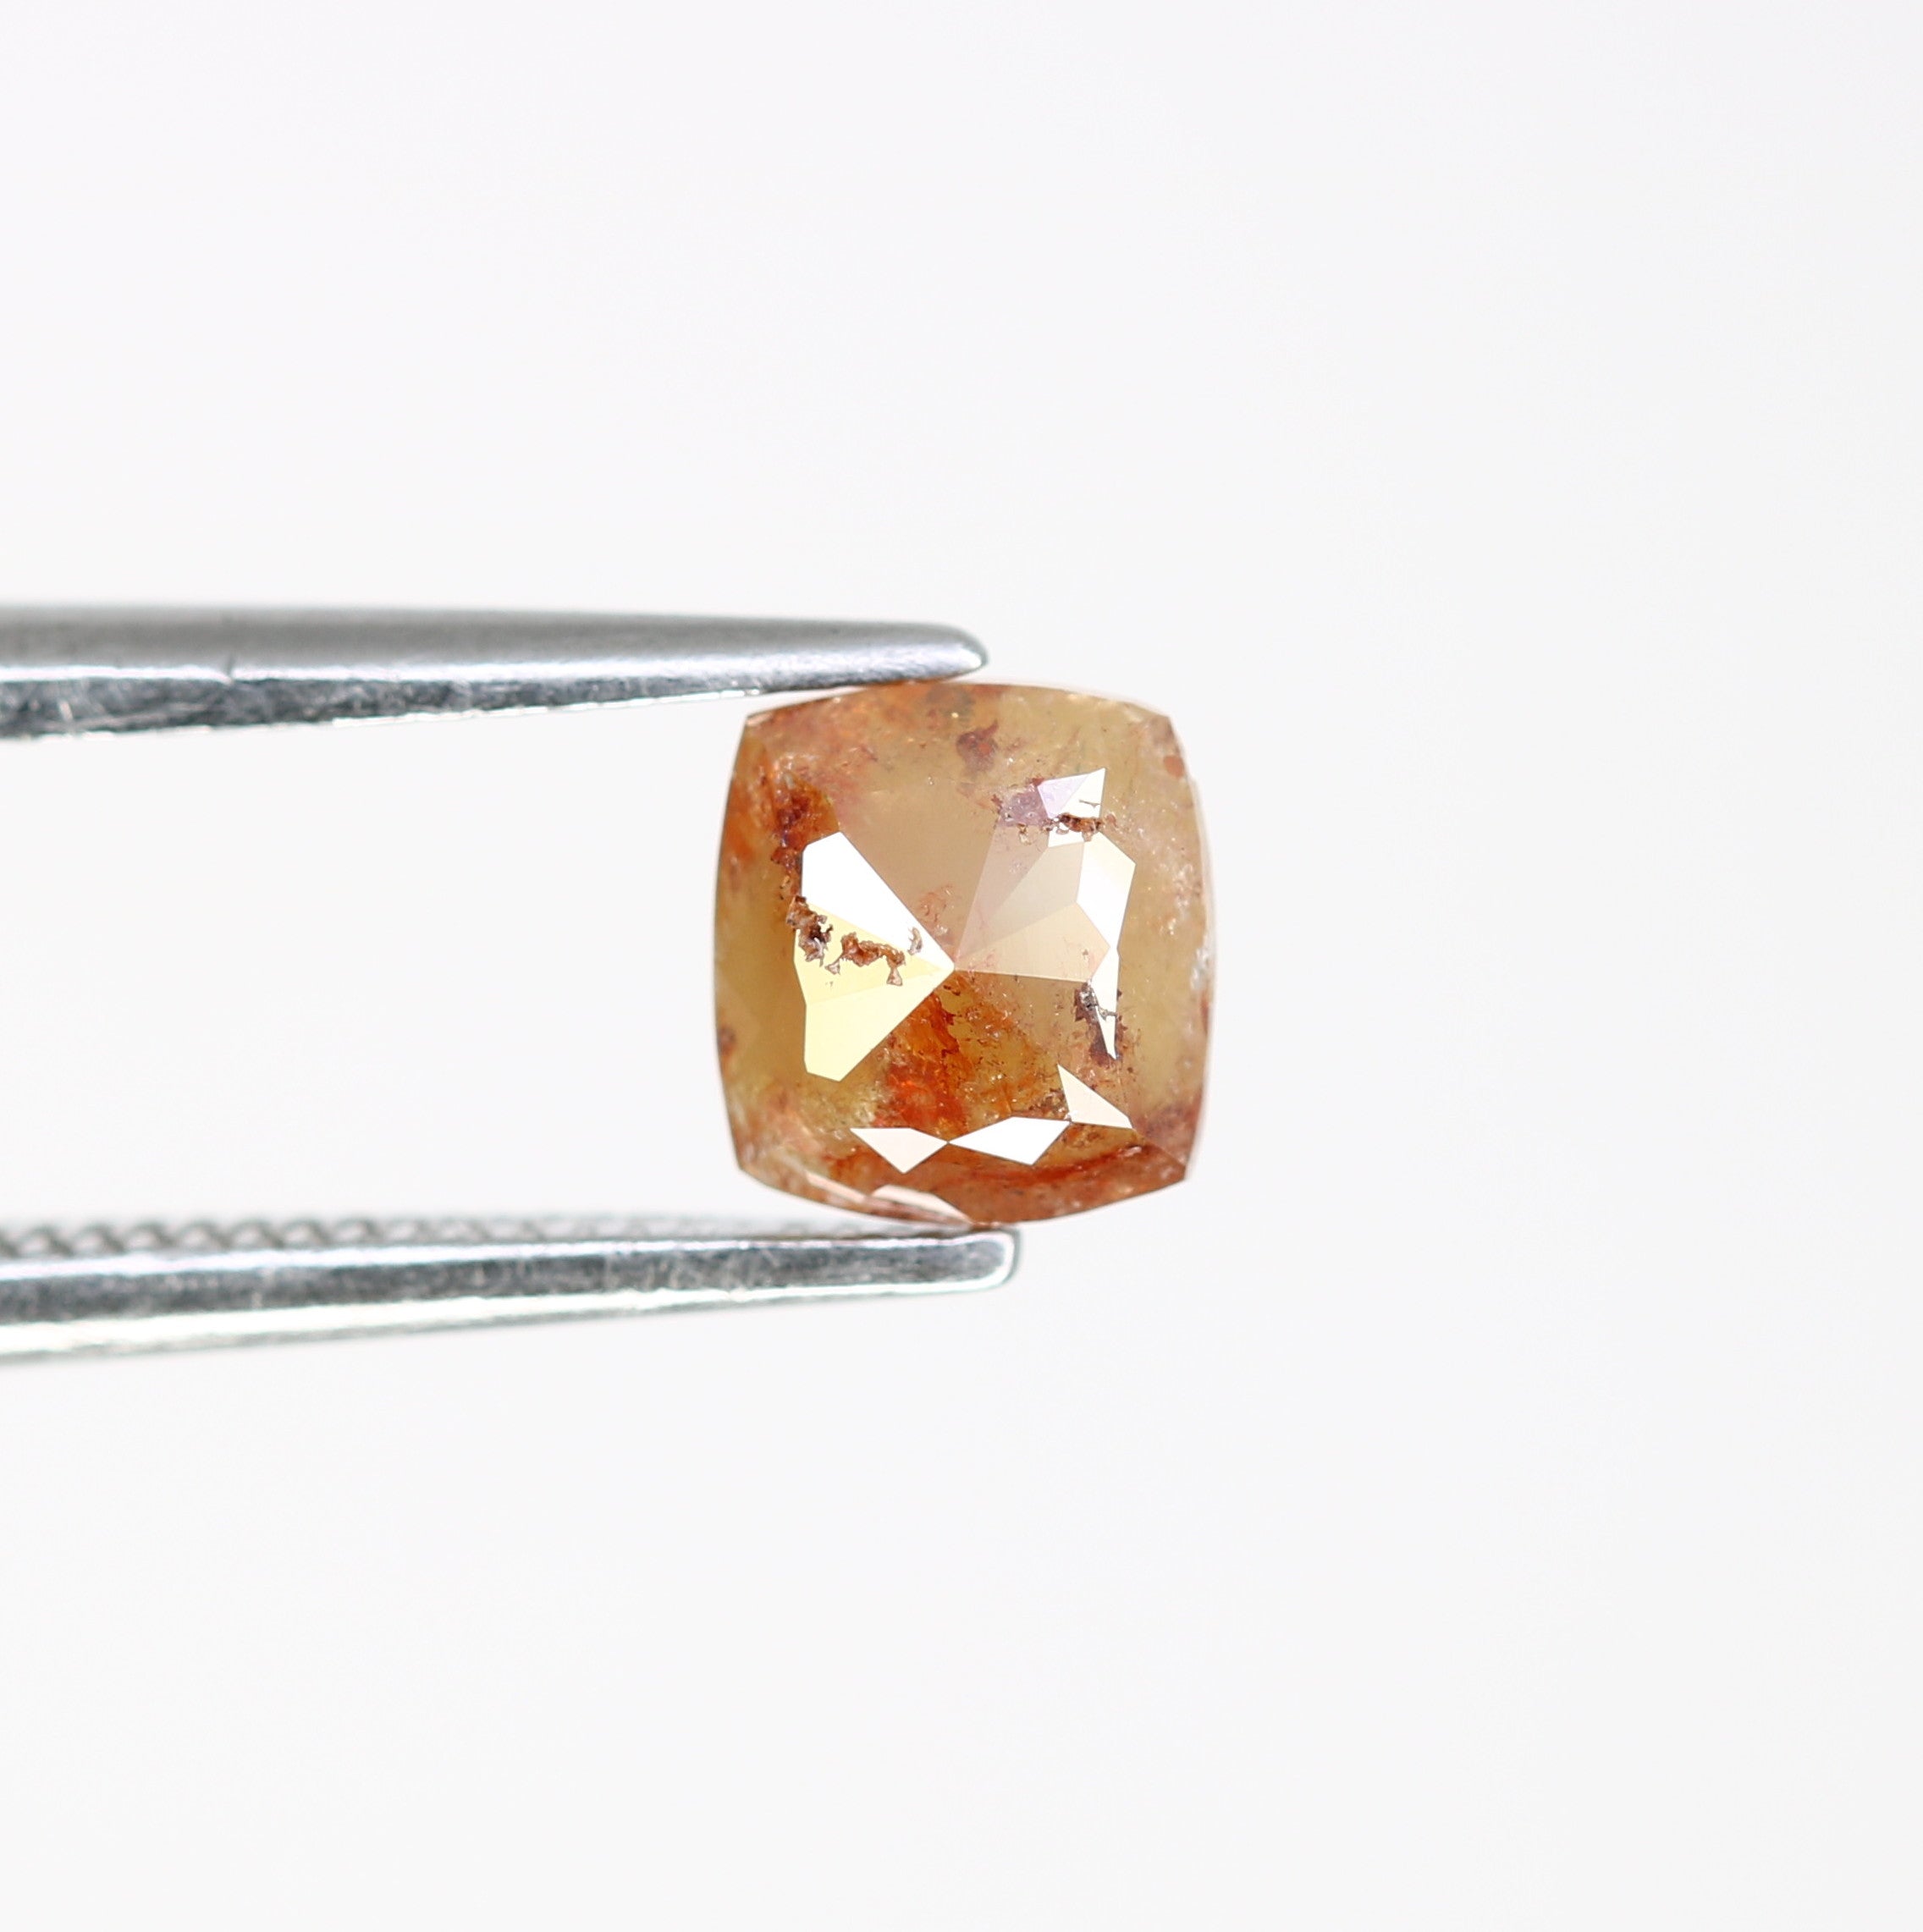 0.60 CT Unique Peach Color 5.30 MM Polished Cushion Shape Diamond For Designer Jewelry